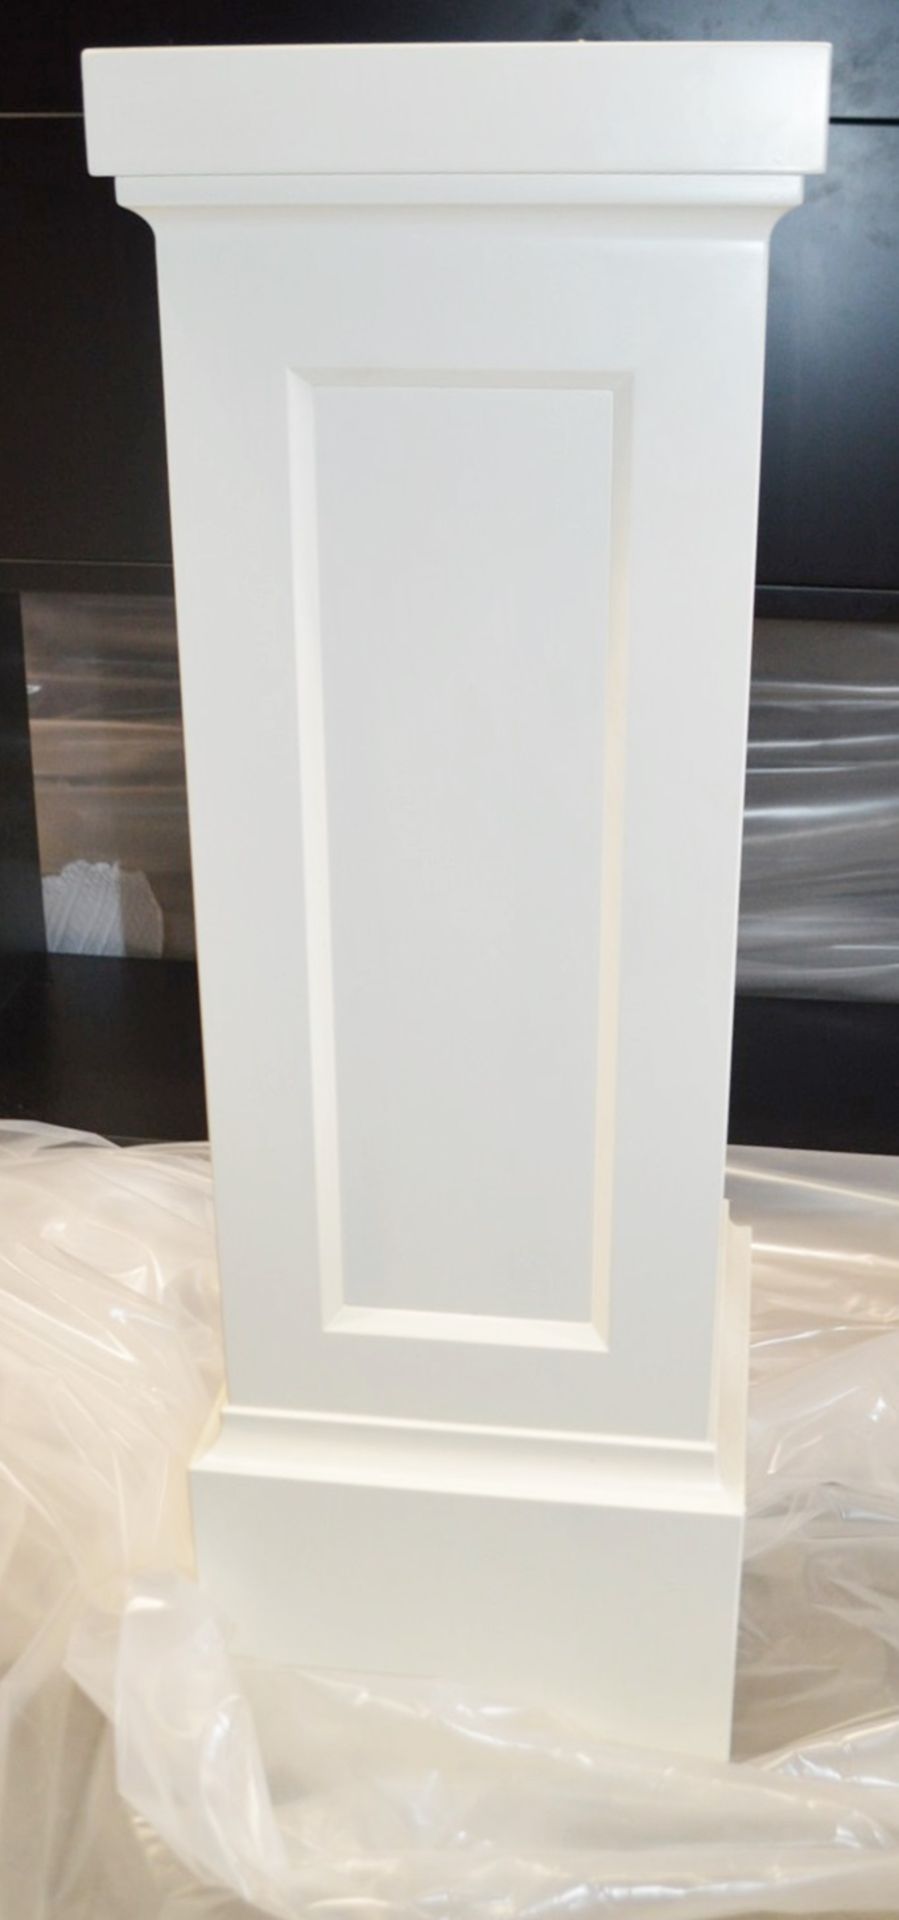 1 x JUSTIN VAN BREDA Legacy Pedestal / Display Stand - W30 x D30 x H90cm - Original Price £1,459 - Image 3 of 6